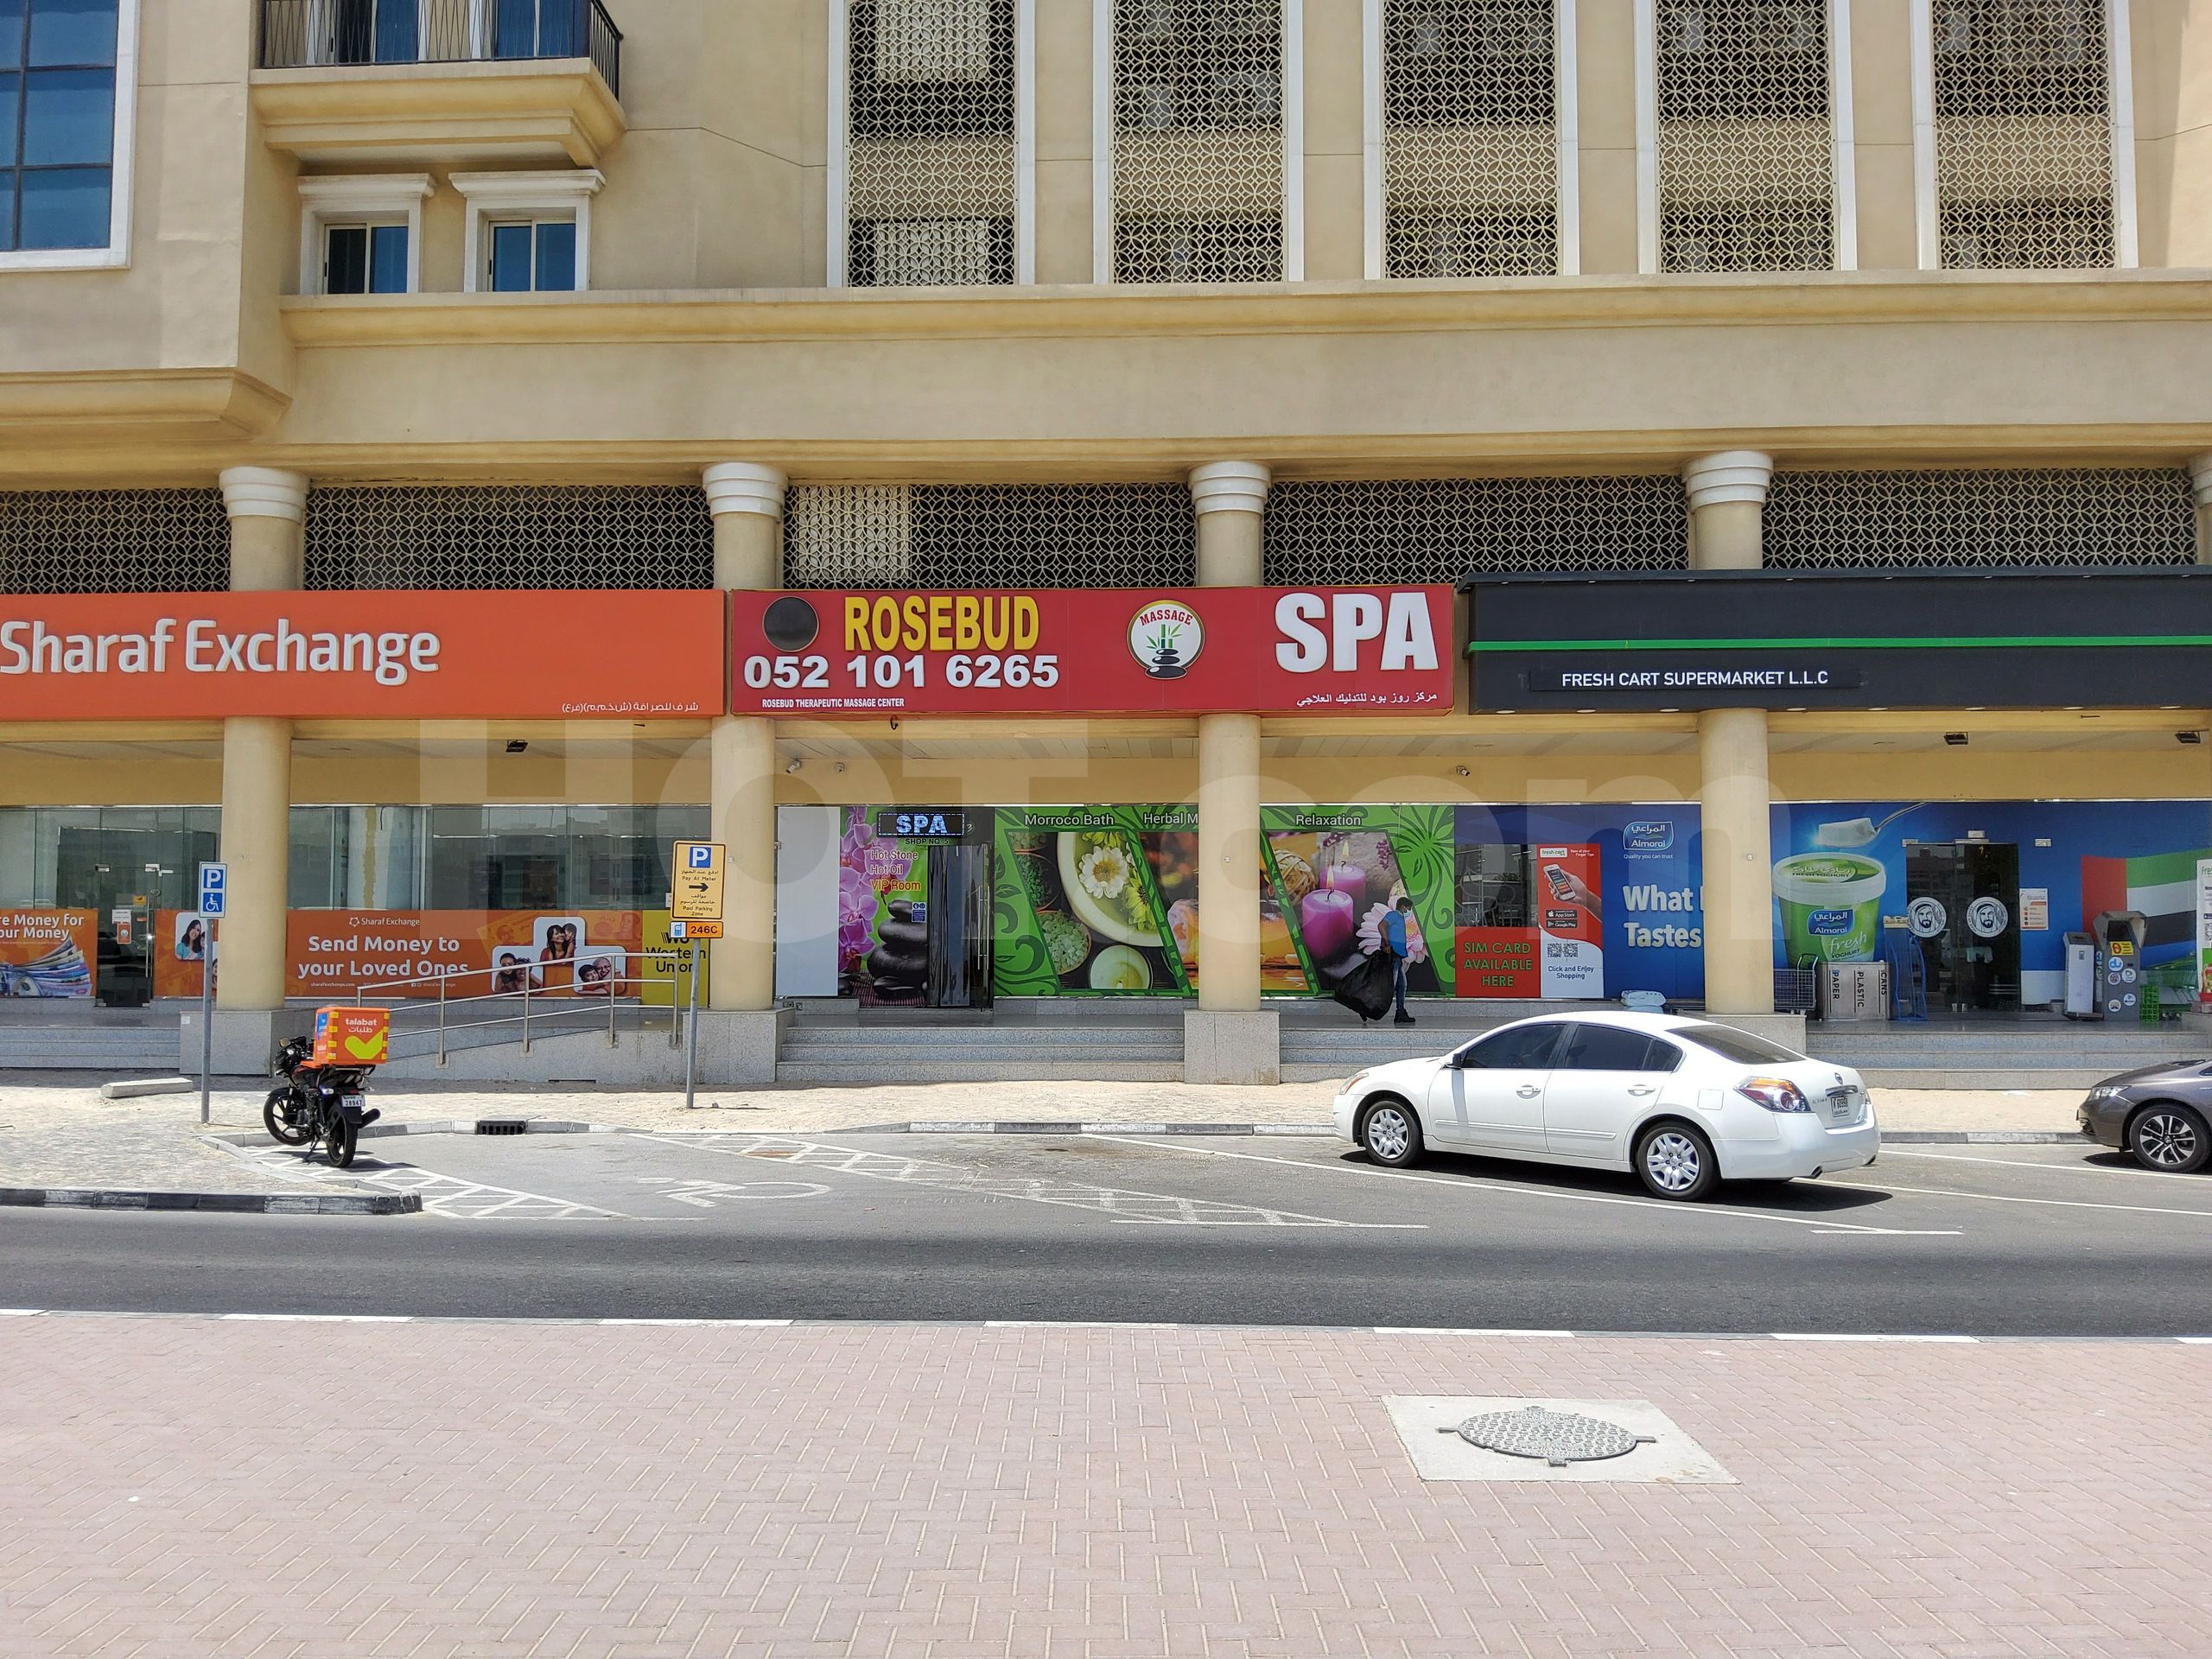 Dubai, United Arab Emirates Rosebud Massage Center